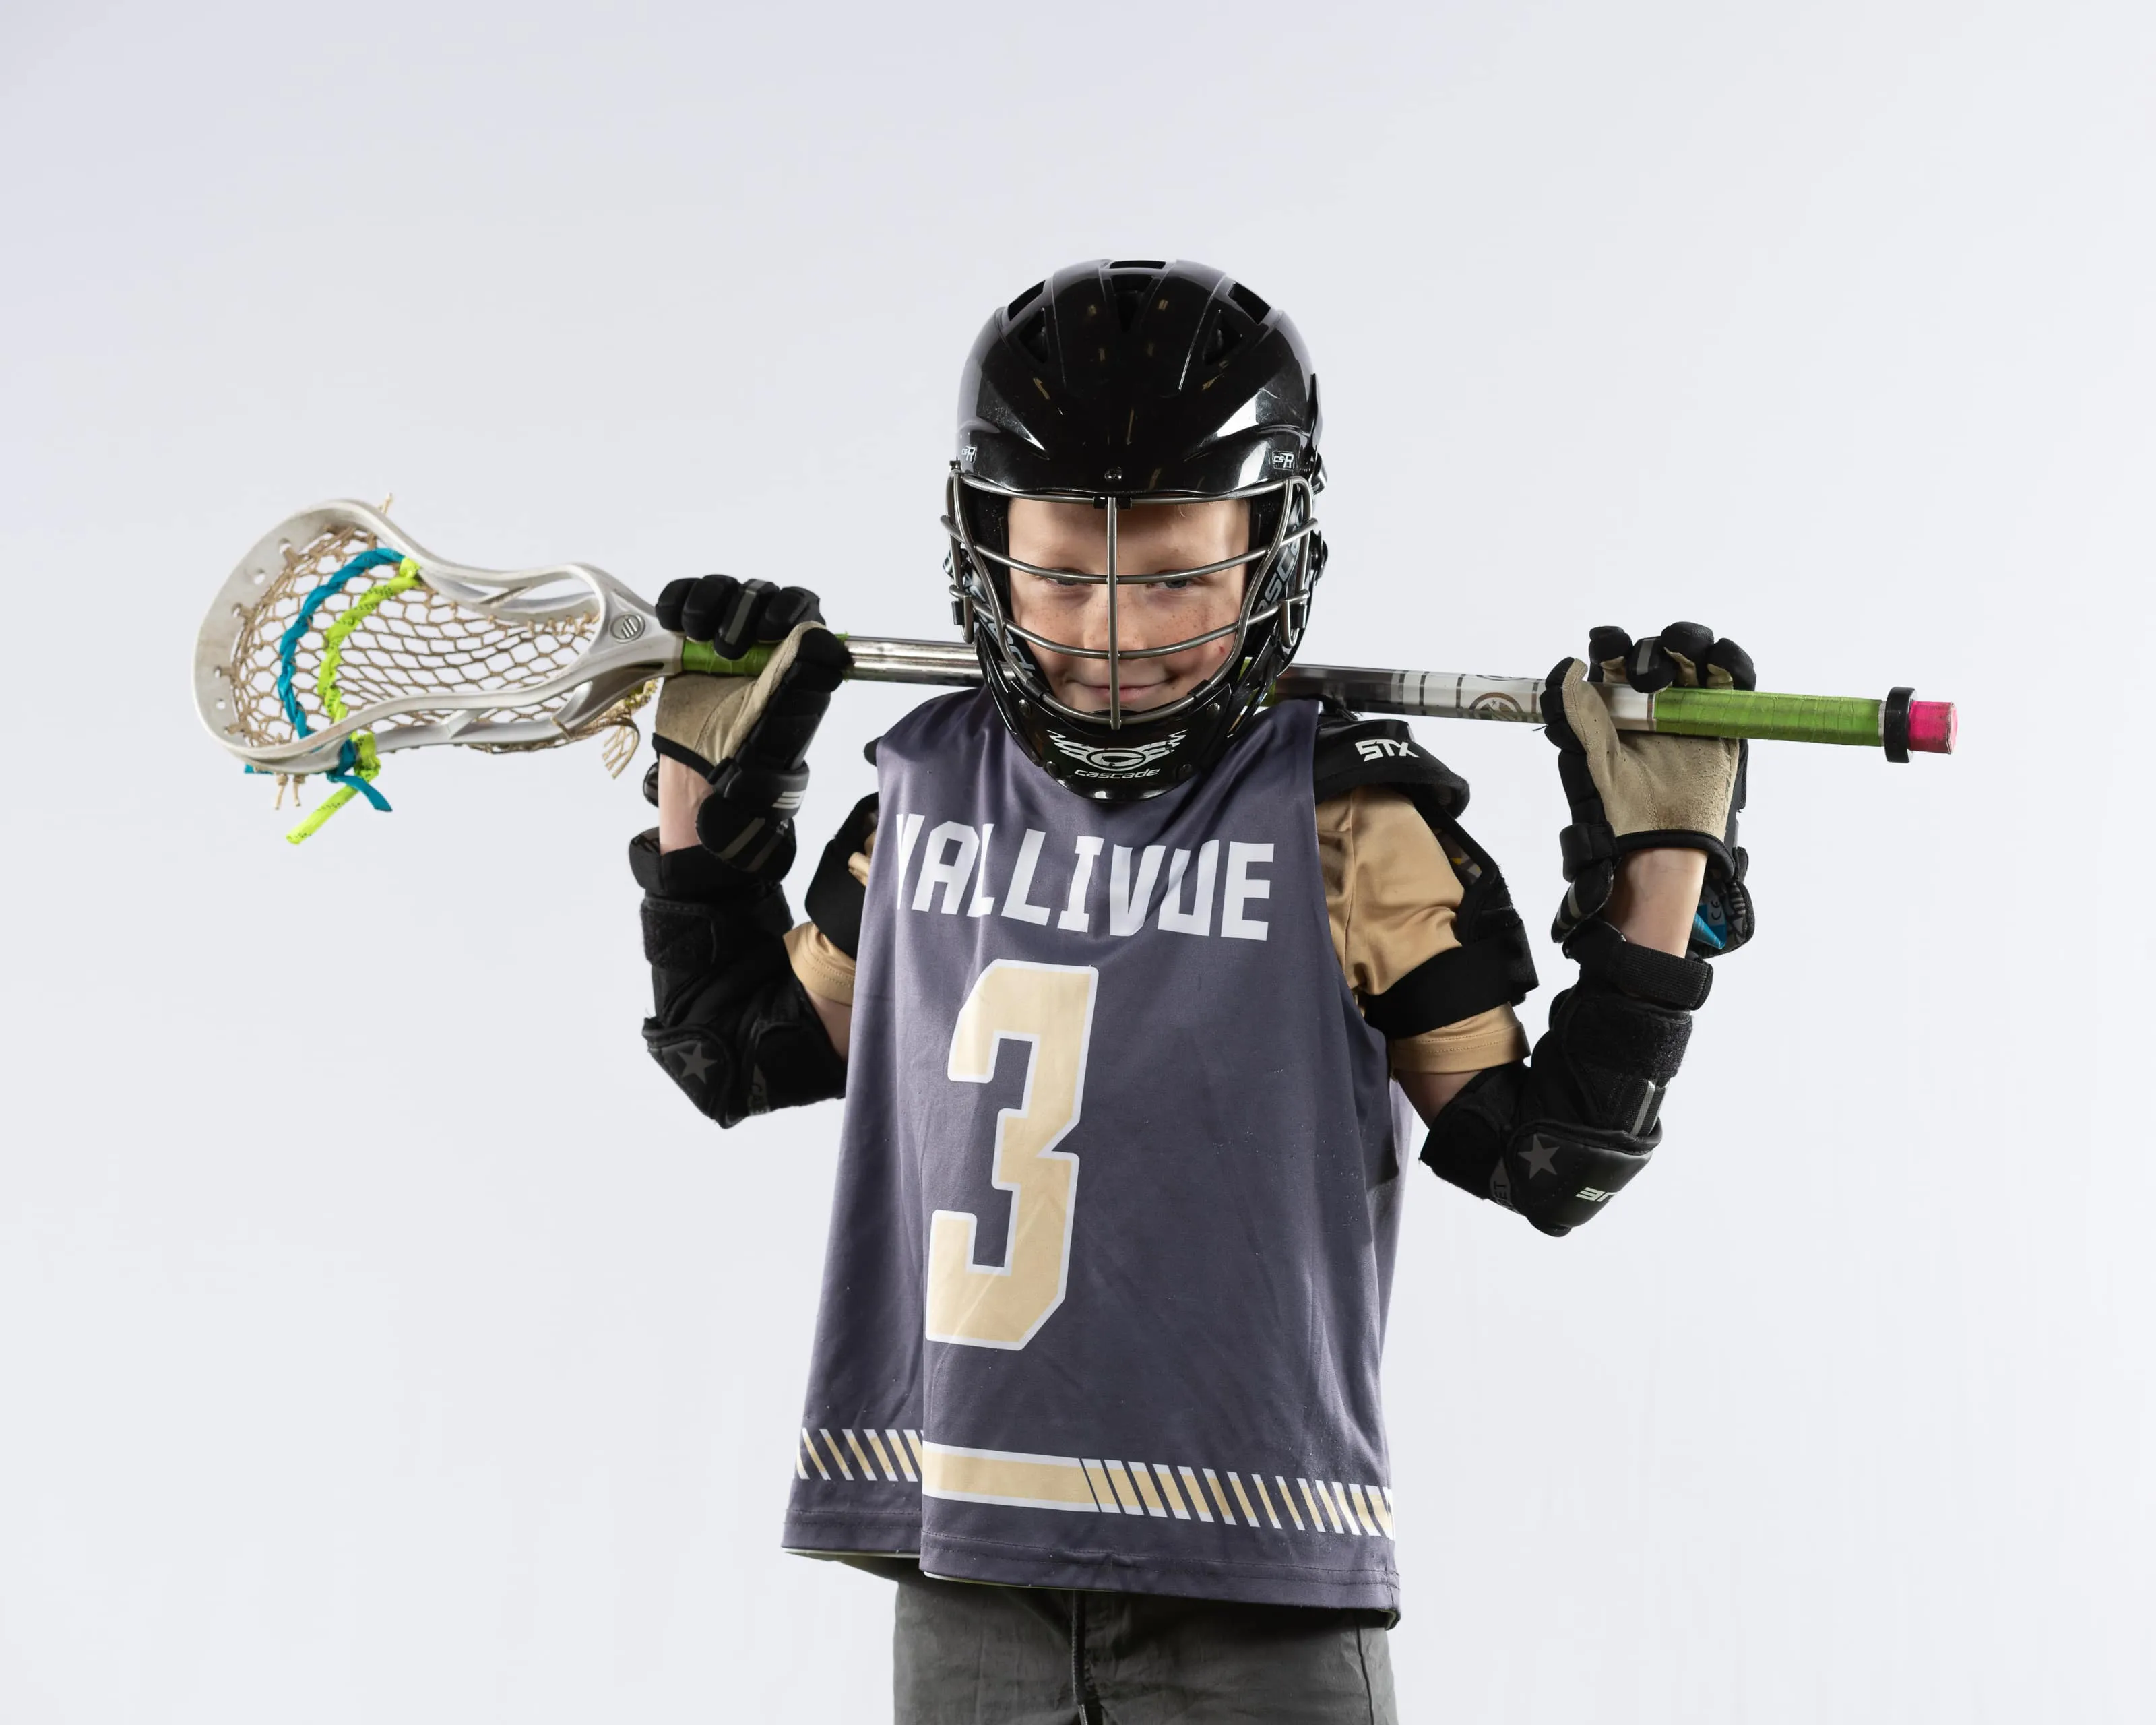 Vallivue Lacrosse player image